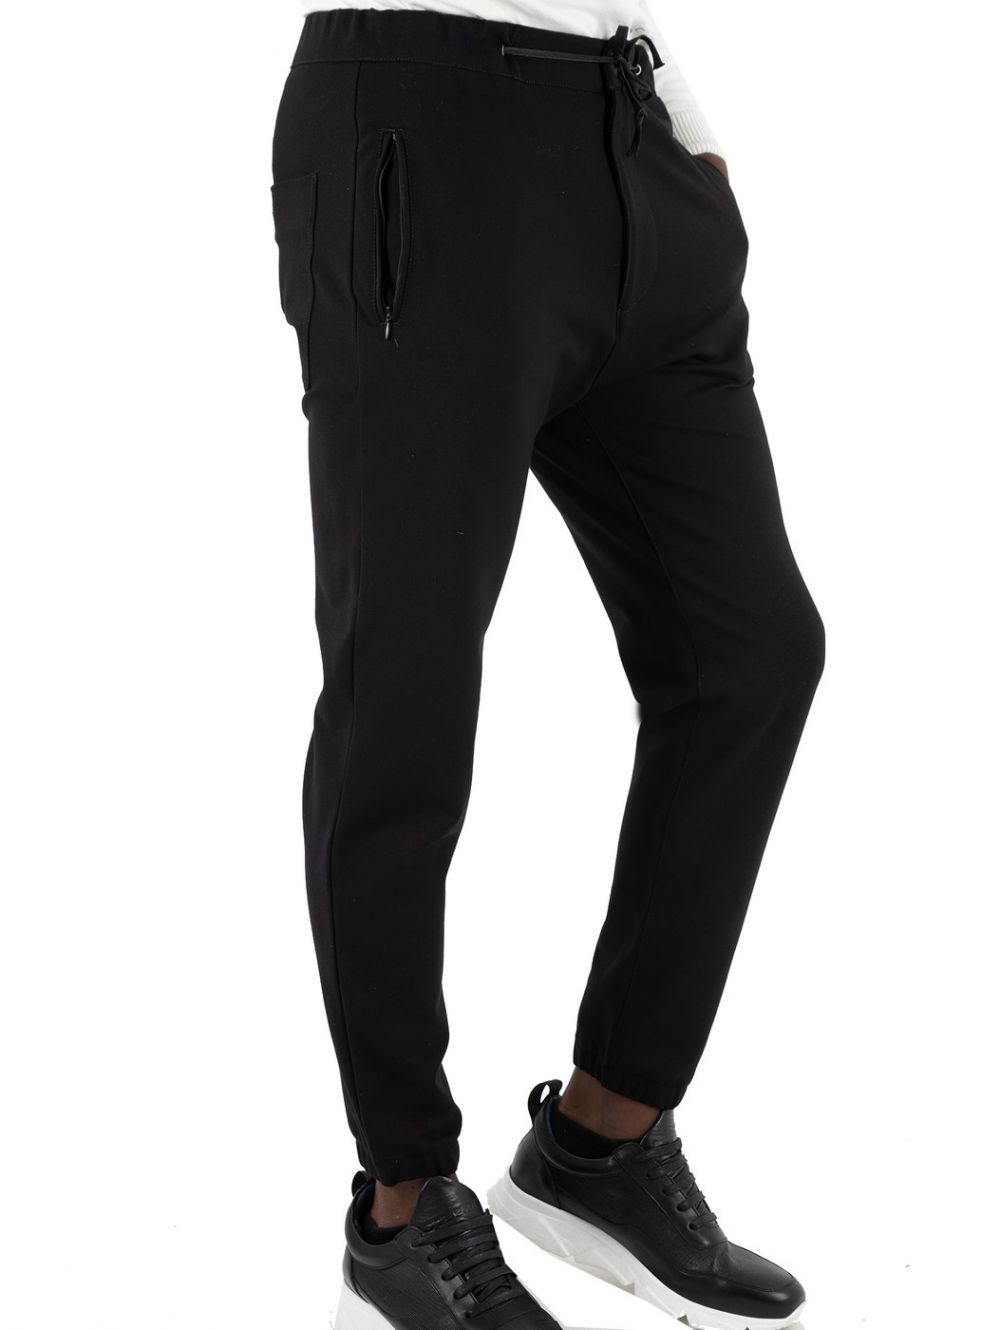 STEFAN Men's black elastic pants. 6016 - TOPTENFASHION.gr